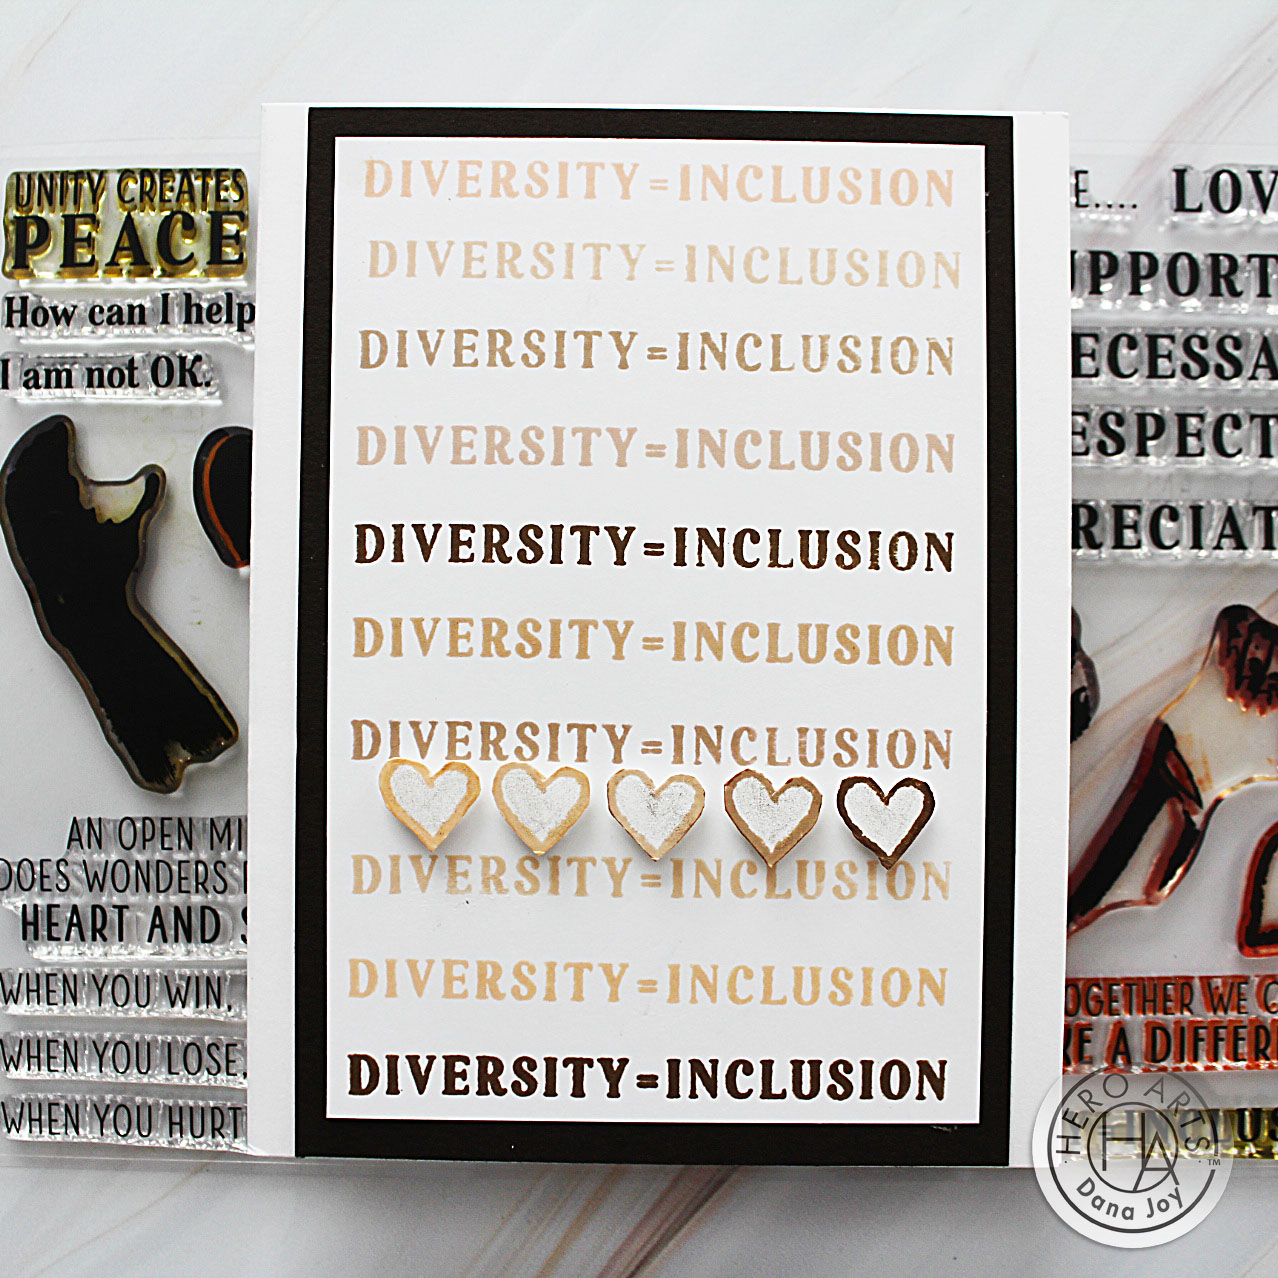 Diversity=inclusion